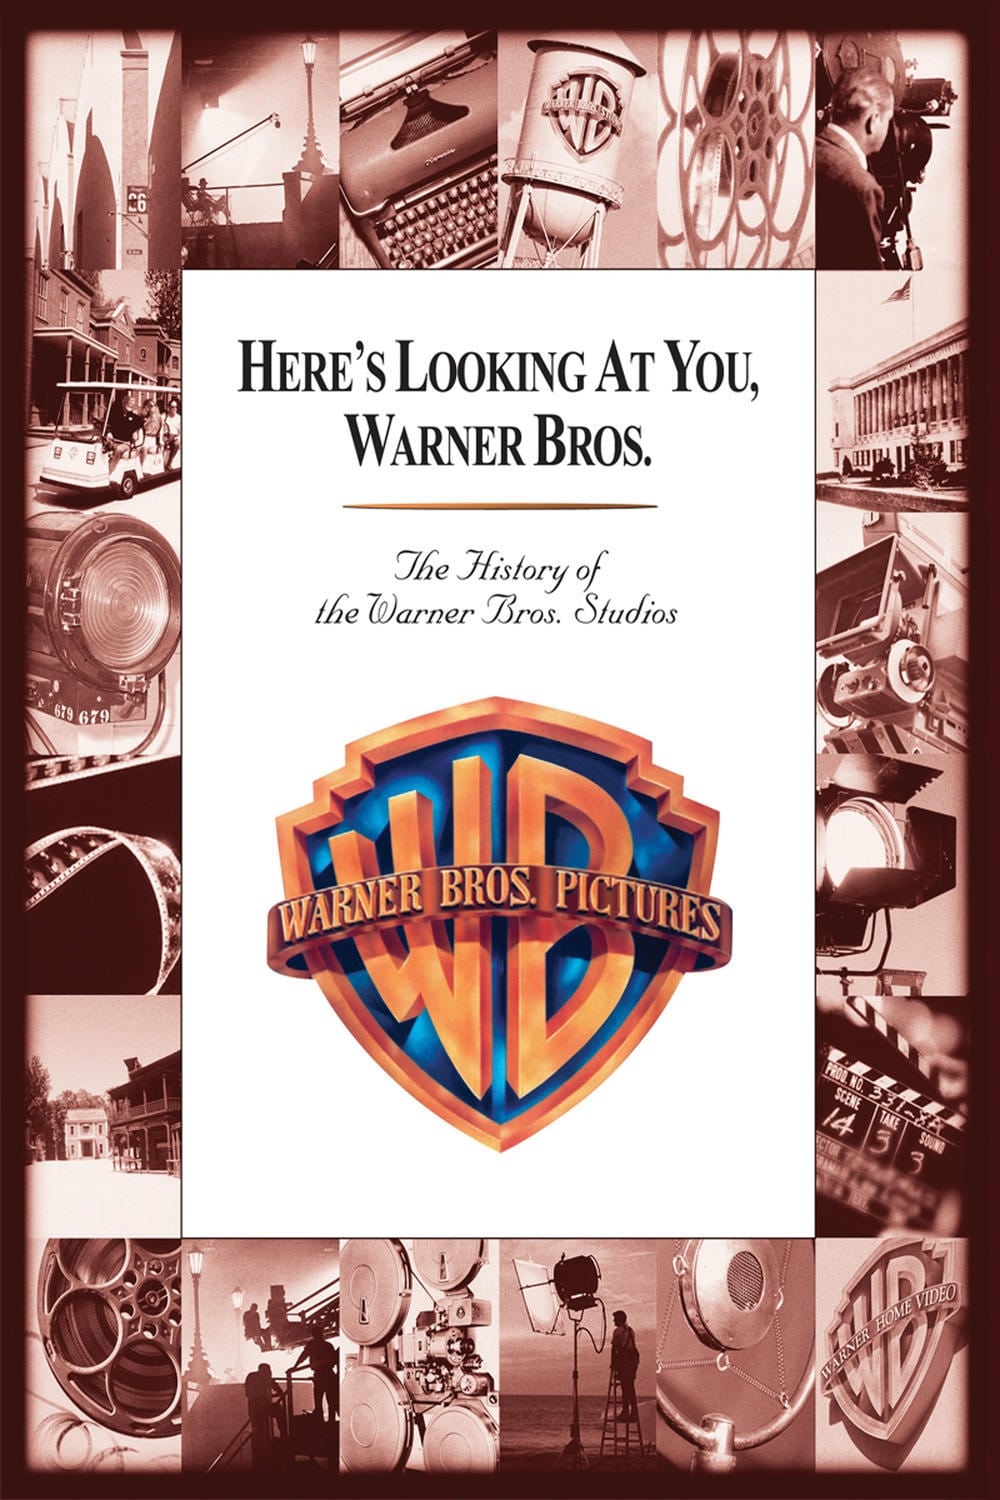 Heres Looking At You, Warner Bros.